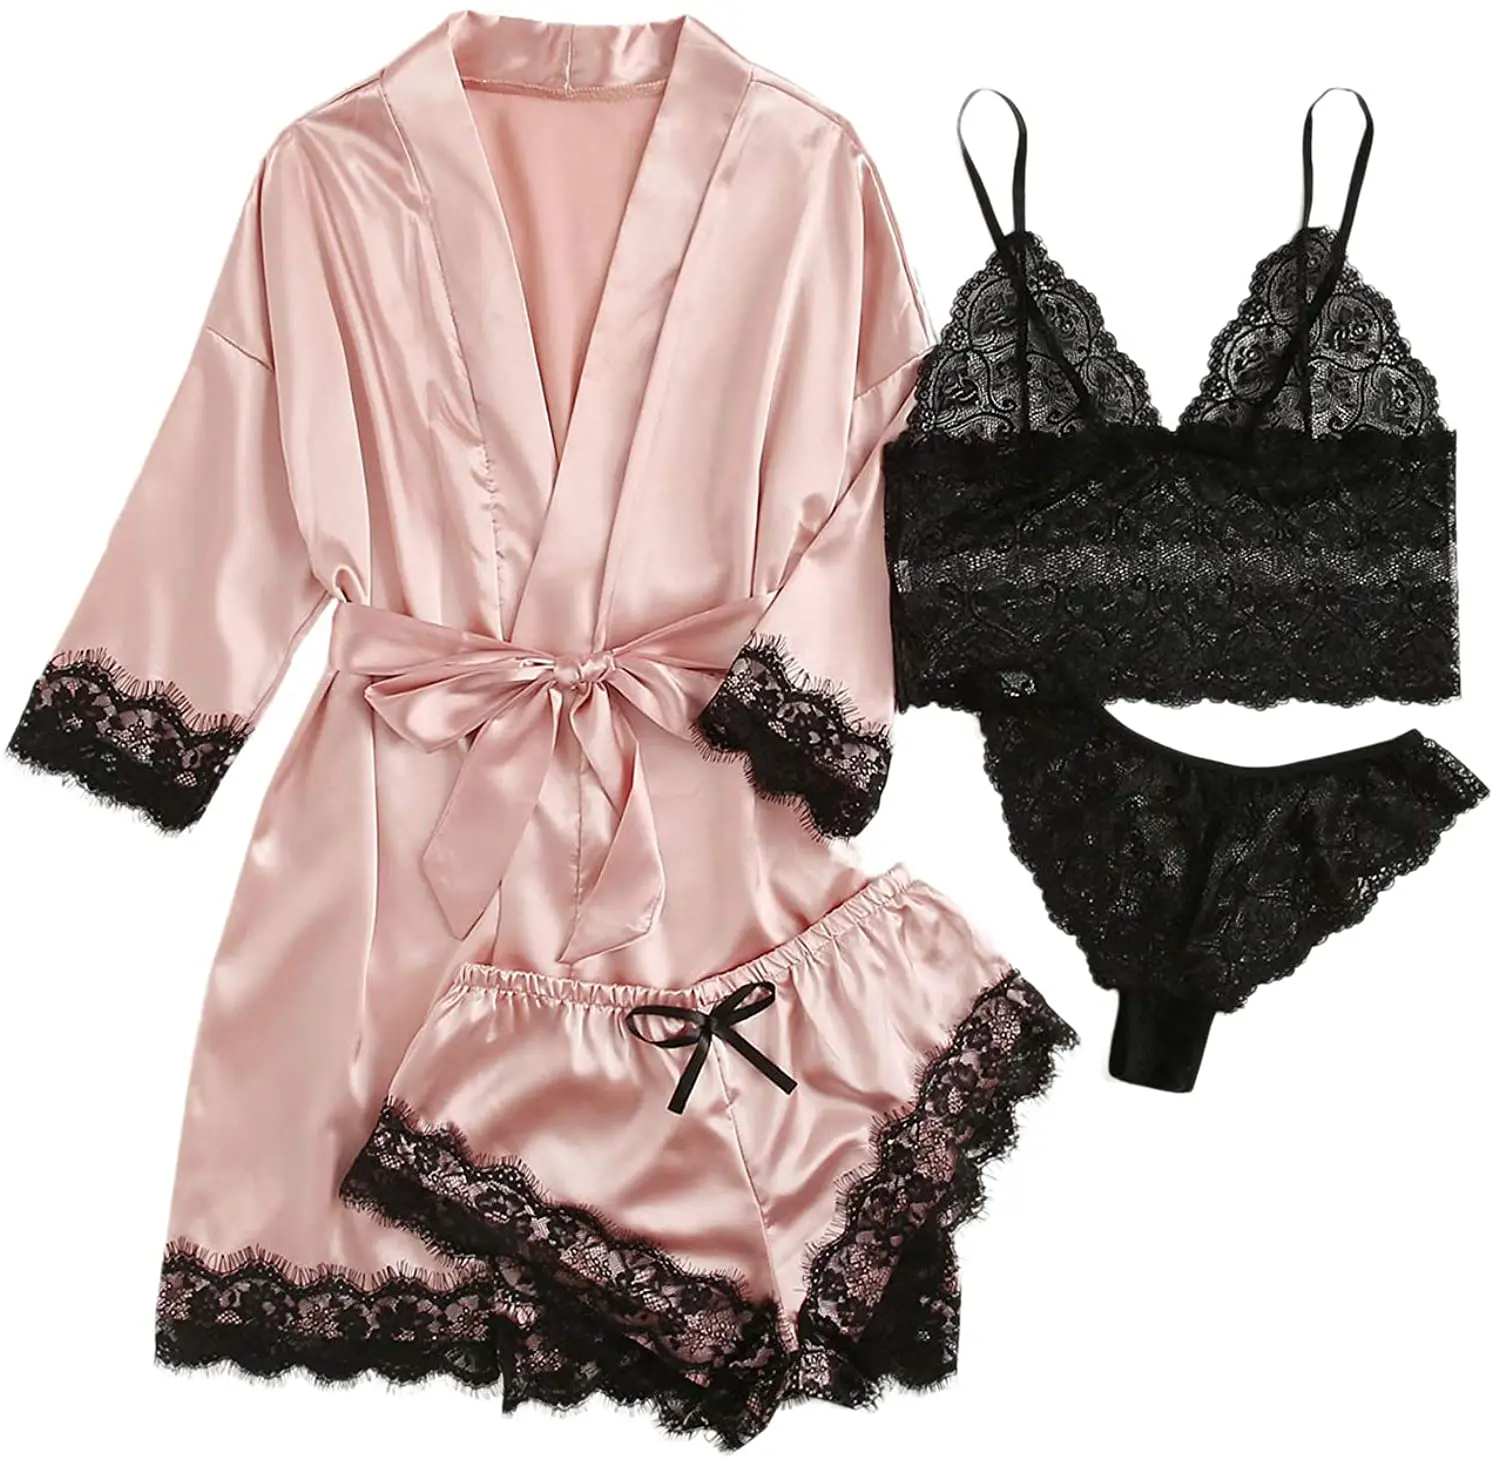 AFGF Women Lingerie Sets Floral Lace Trim Satin Cami Pajama Set,Sexy Nightdress Sleepwear with Robe 